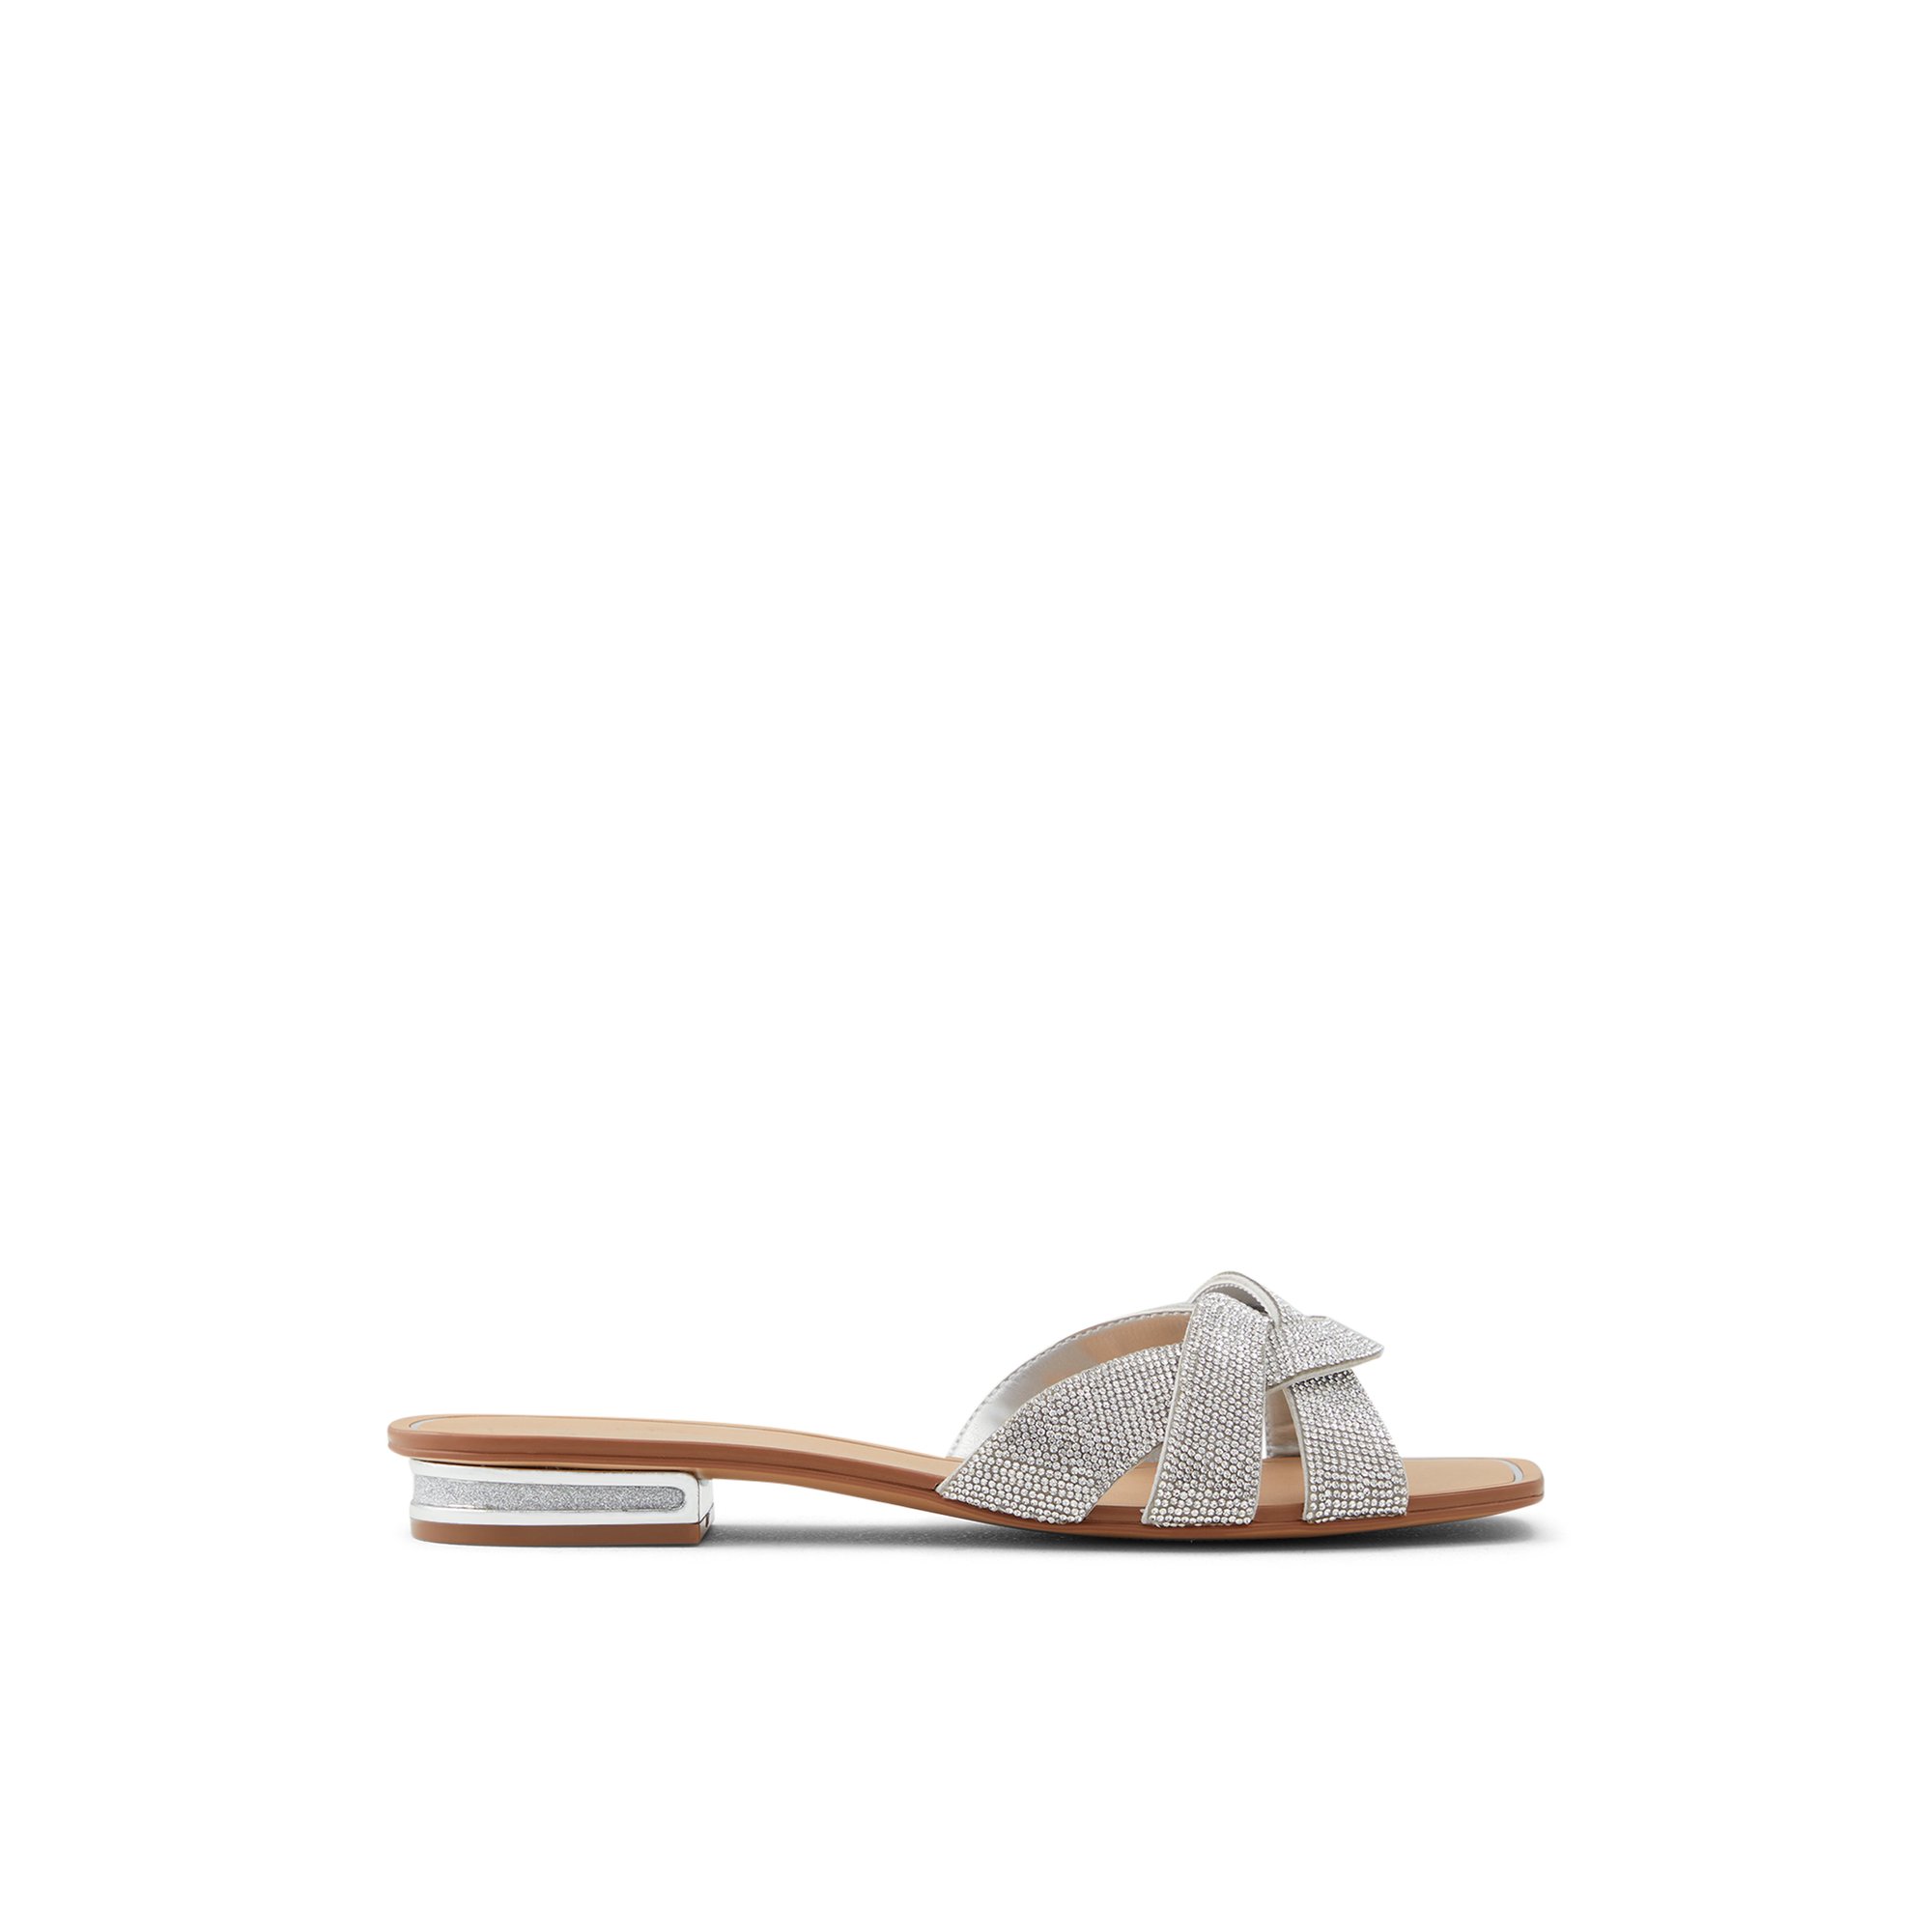 ALDO Coredith - Women's Sandals Flats - Silver